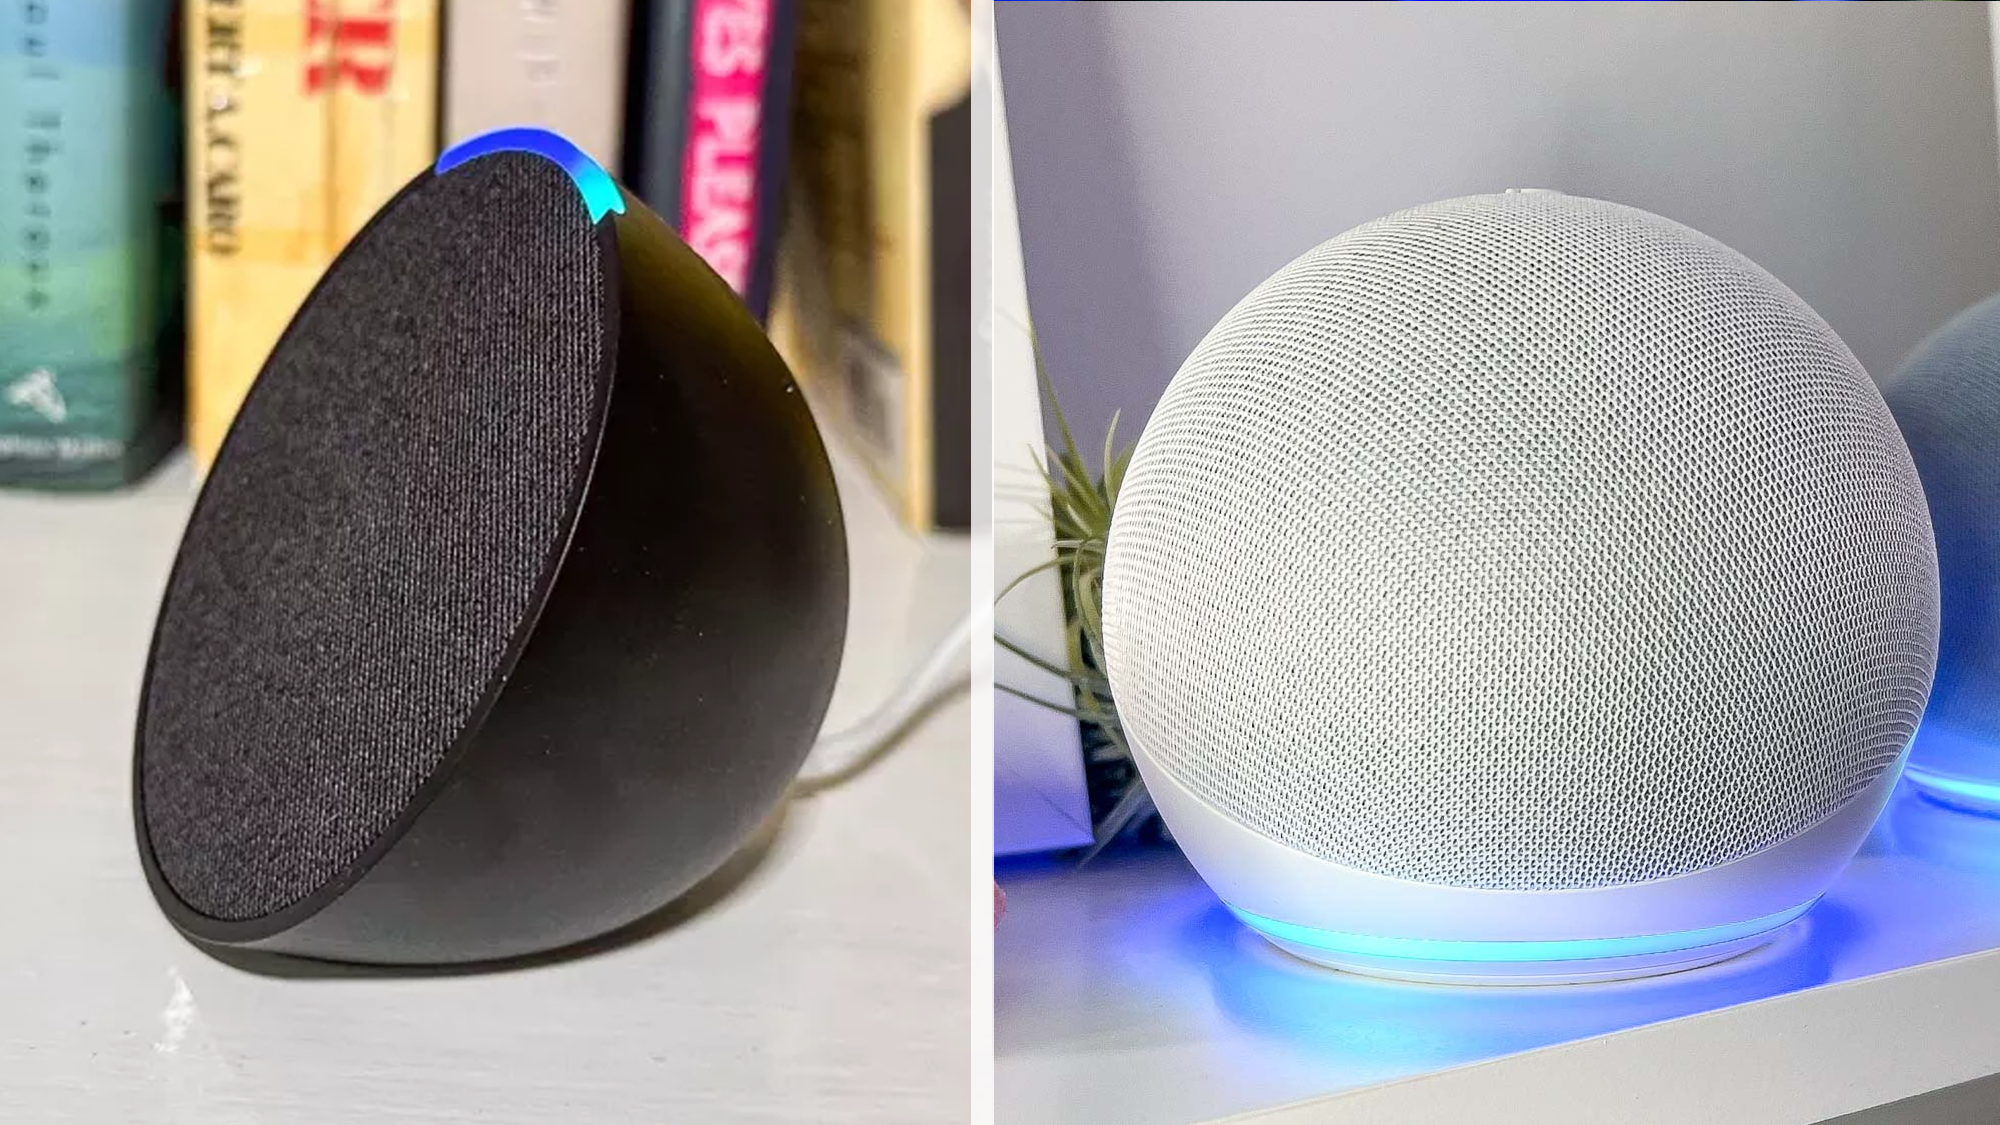 Echo Pop vs Echo Dot